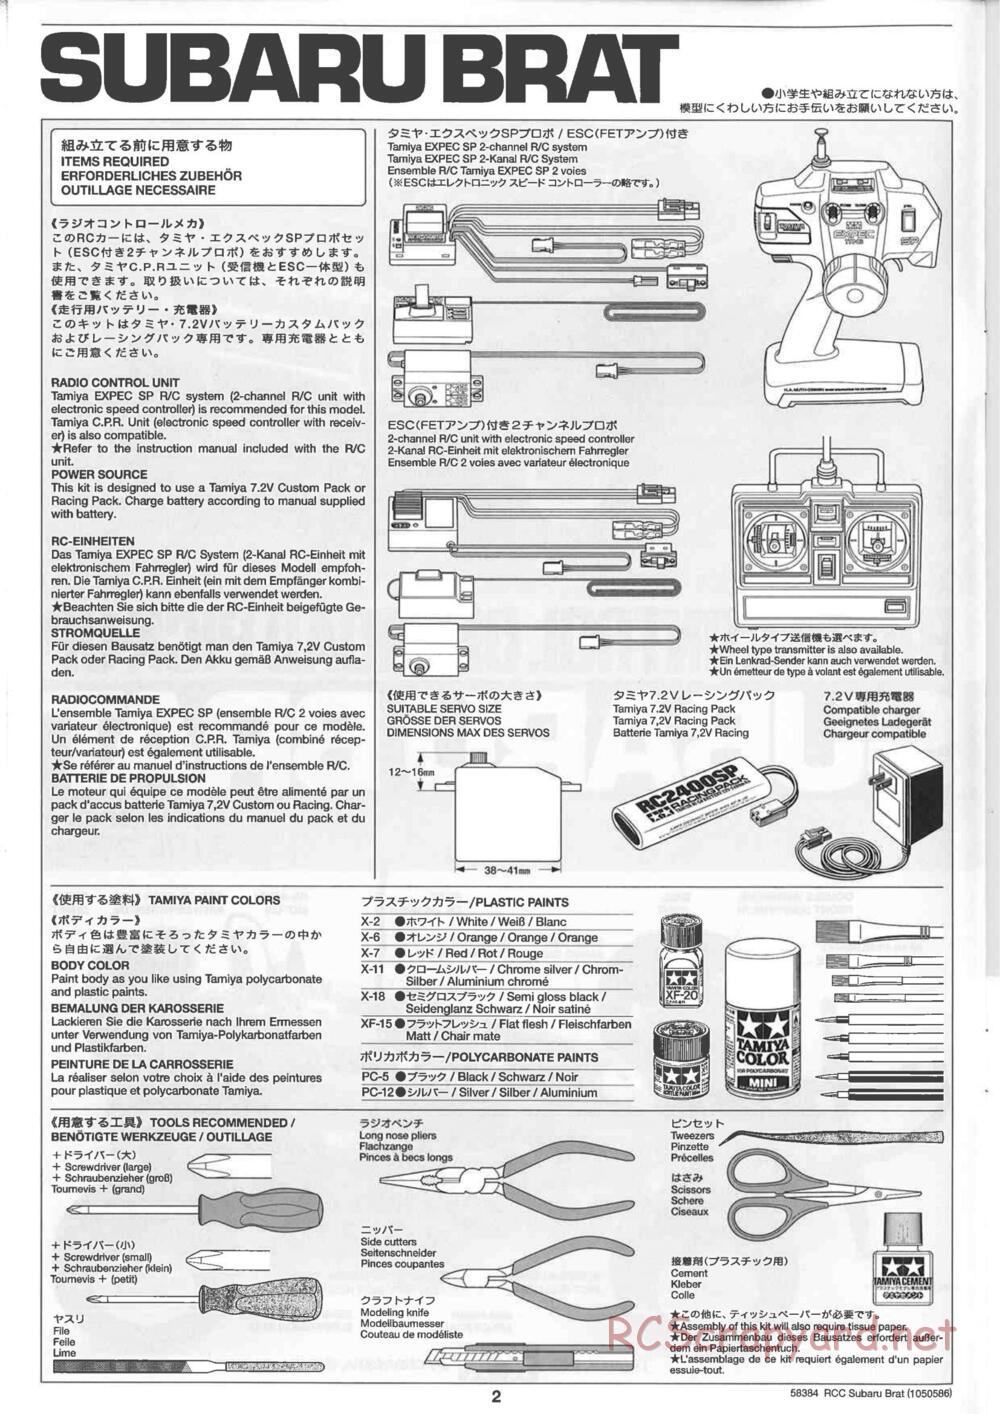 Tamiya - Subaru Brat 2007 - ORV Chassis - Manual - Page 2